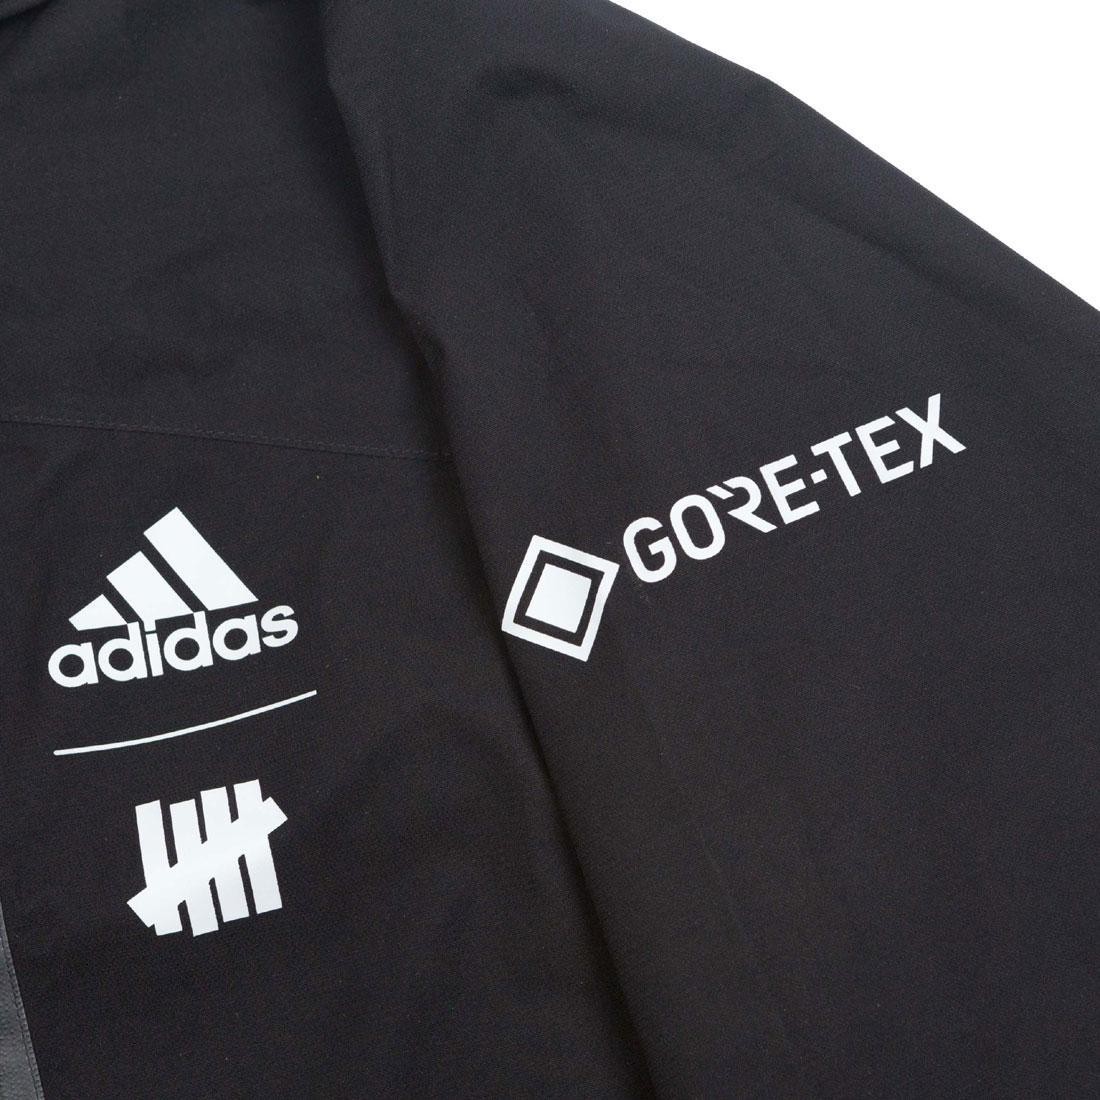 adidas gtx jacket